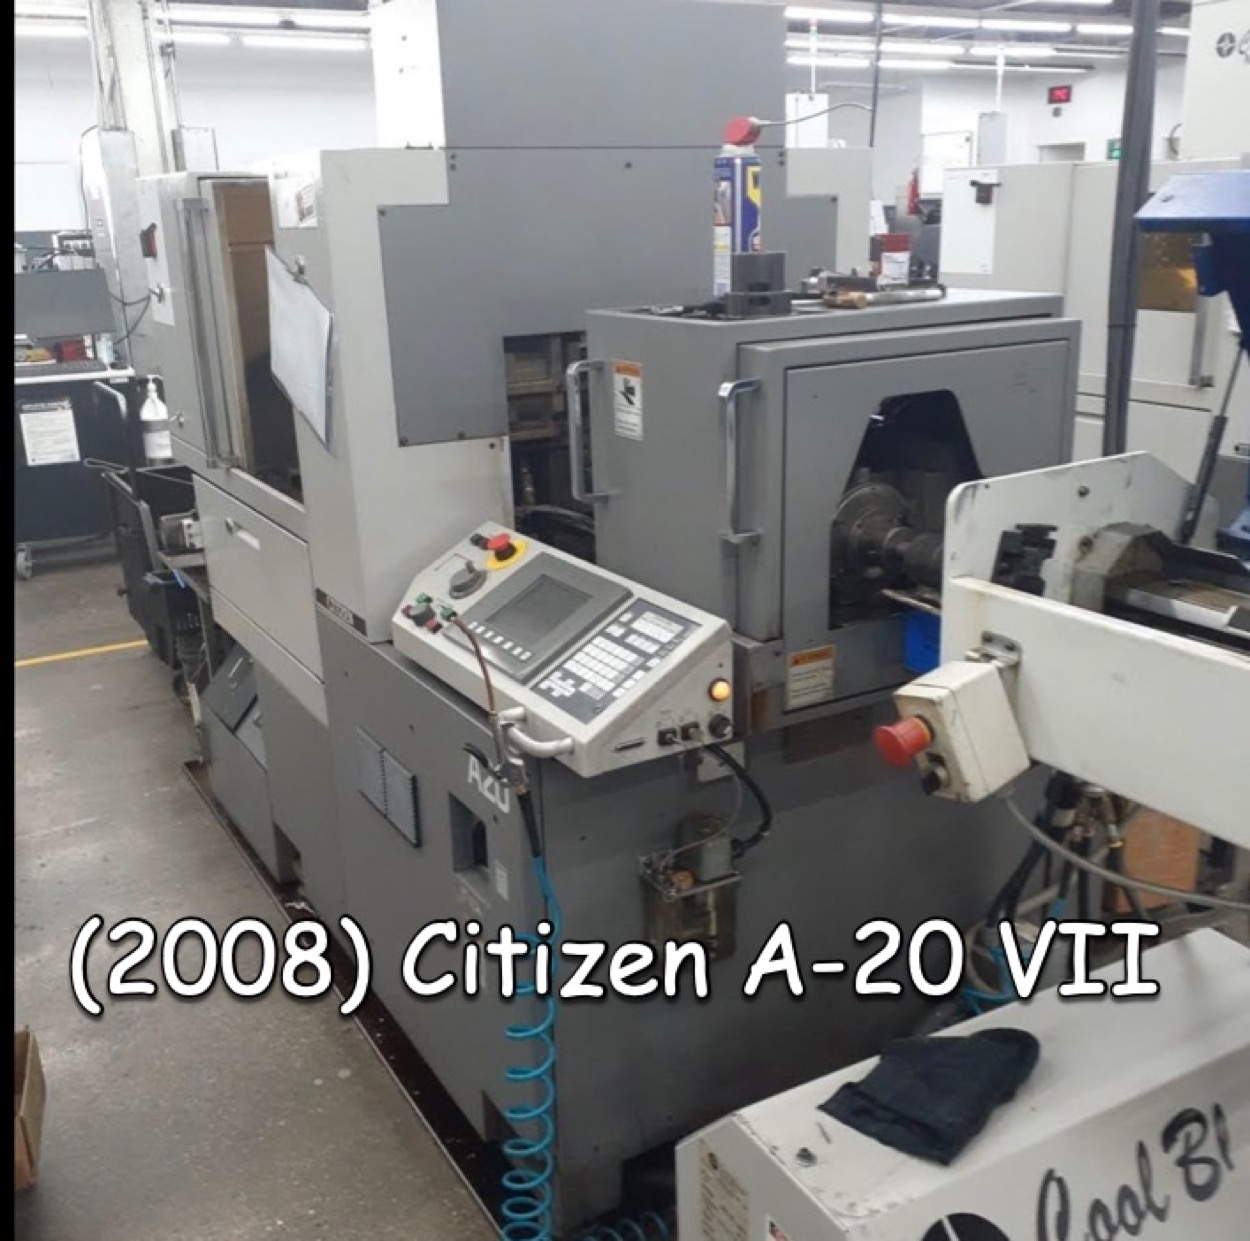 Citizen A-20 VII 2008